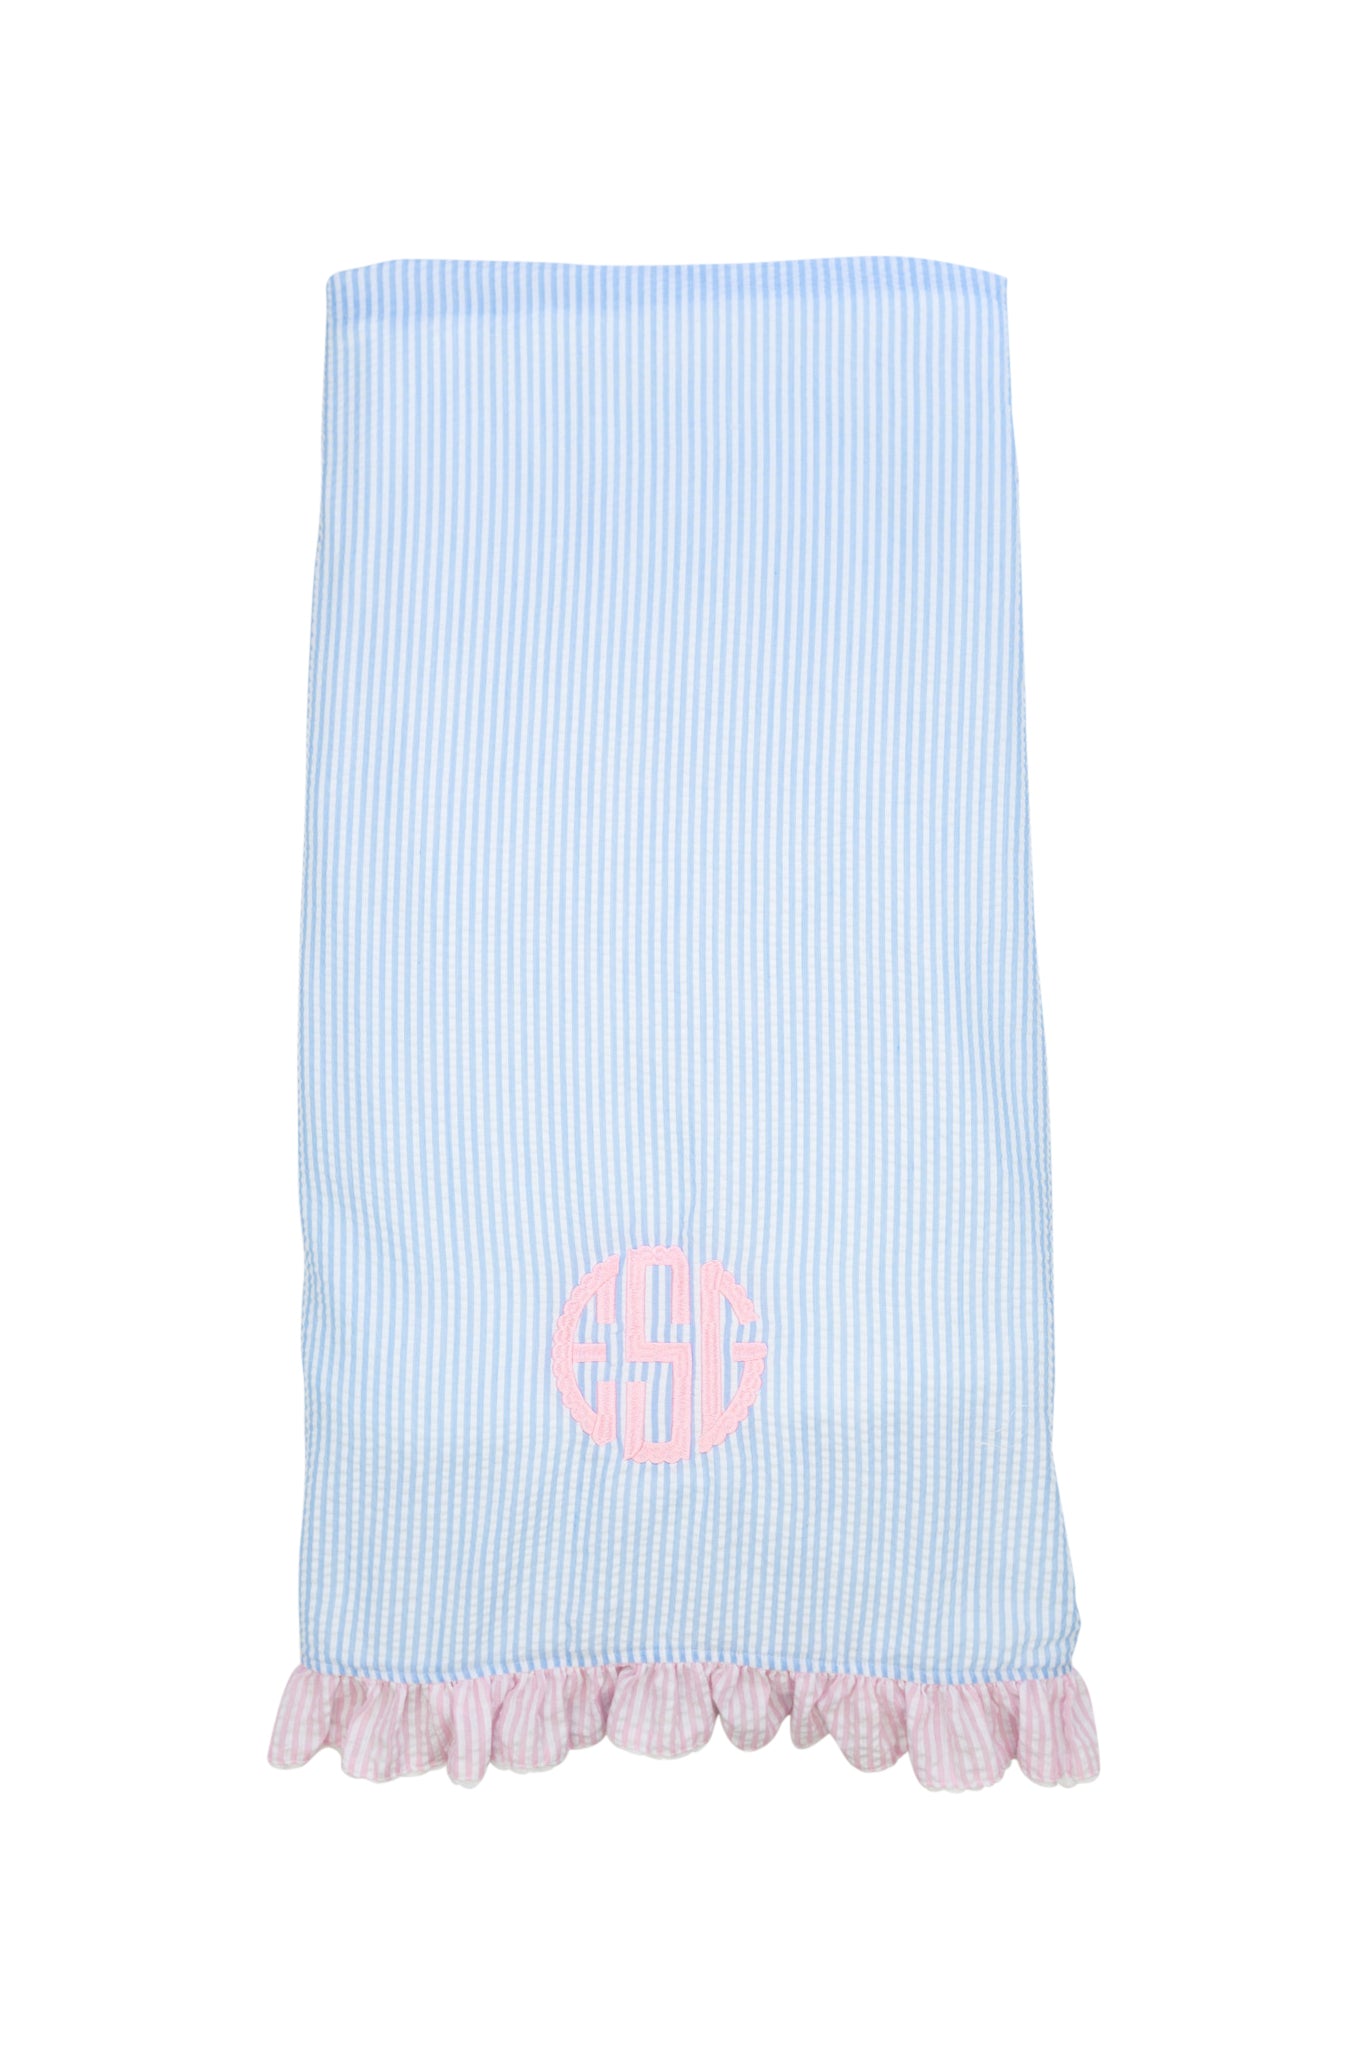 Girls Blue/Pink Seersucker Beach Blanket